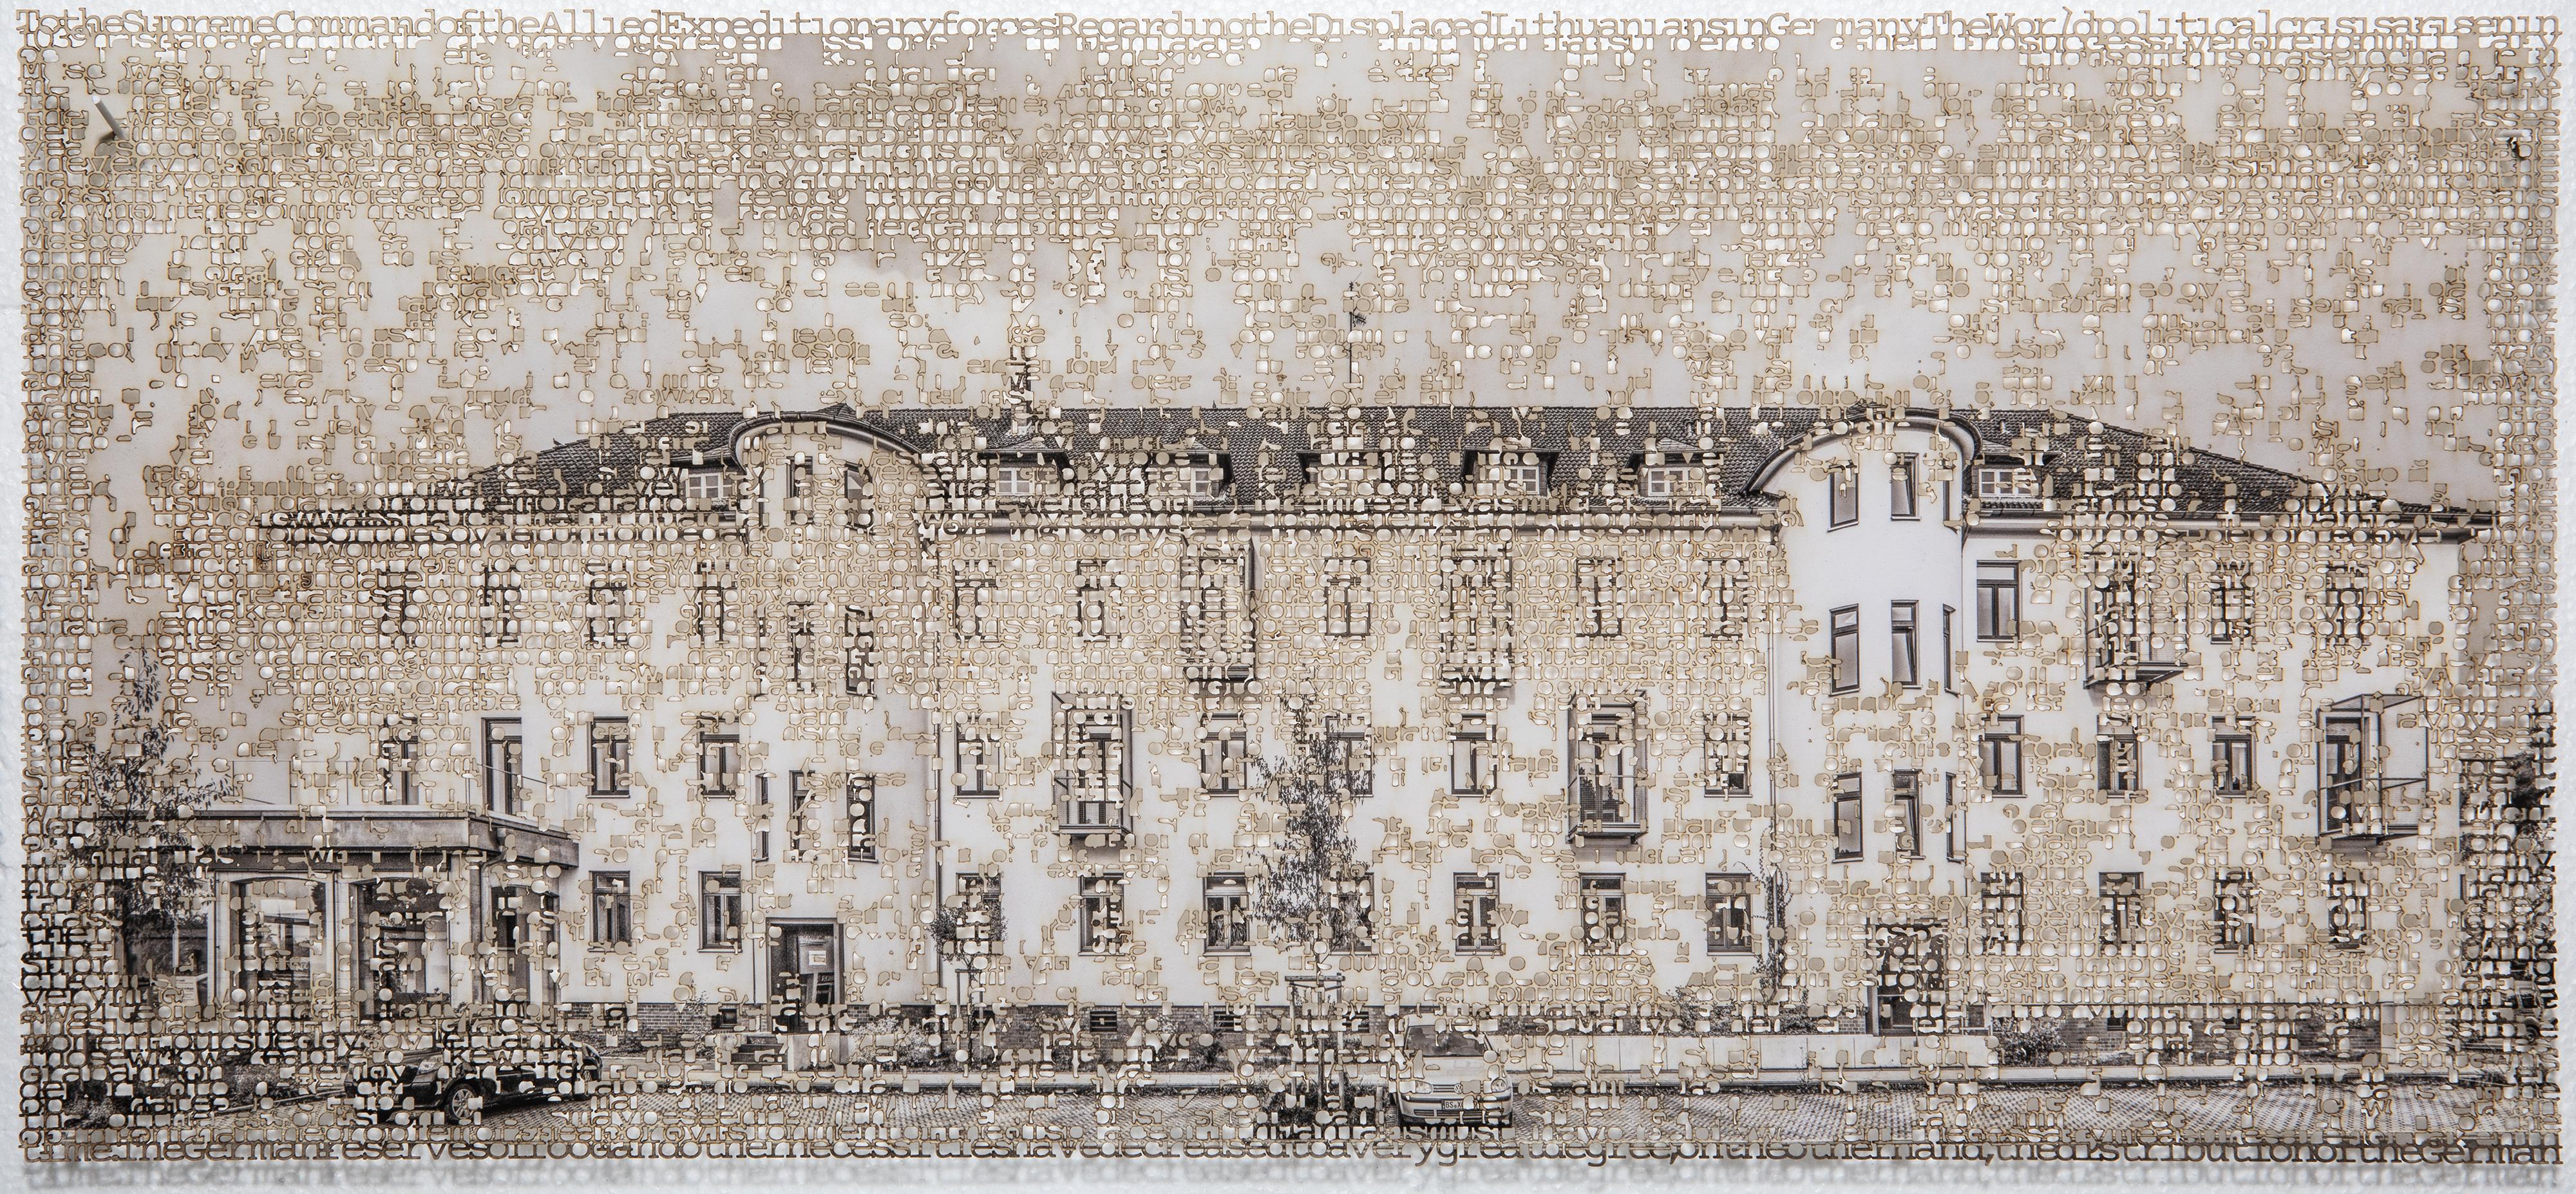 Braunschweig 1,  Laser cut archival pigment ink print, signed, numbered, framed